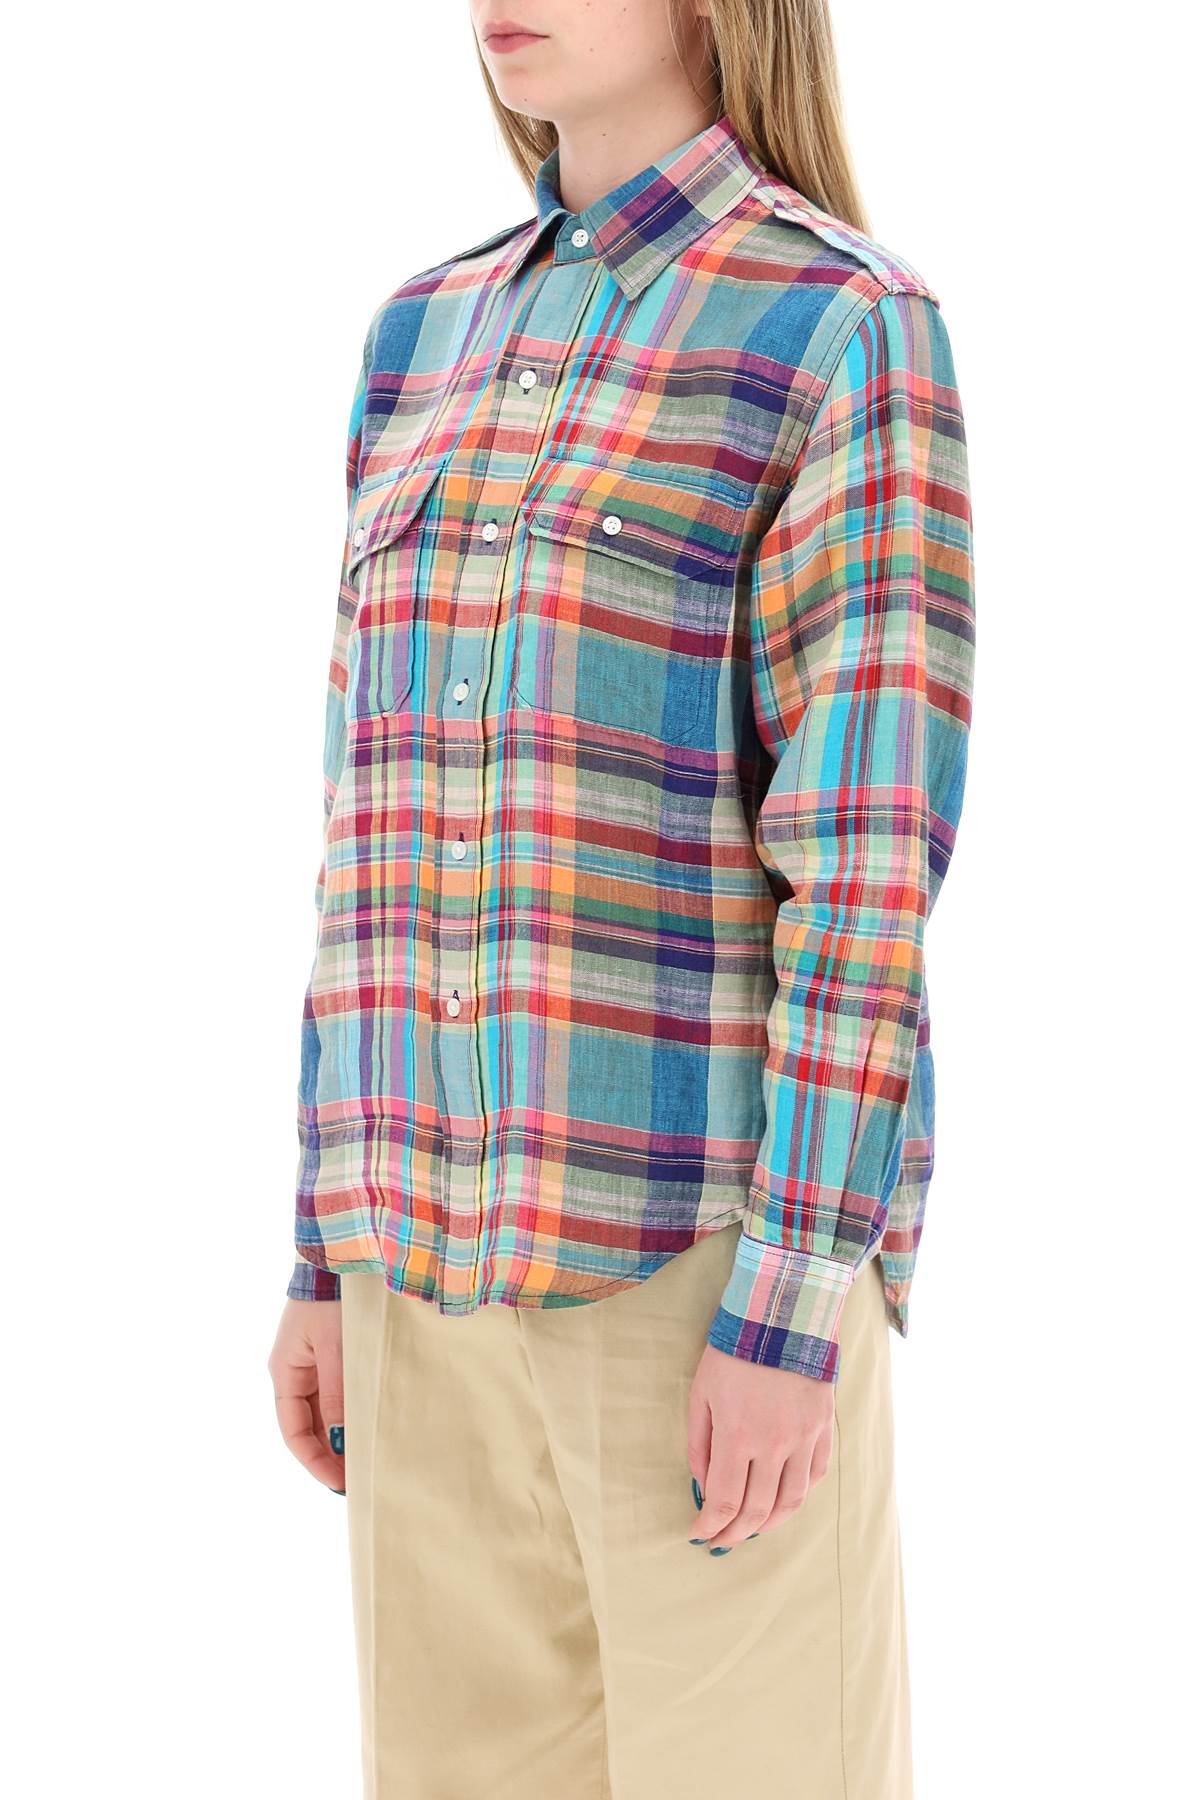 Polo Ralph Lauren Madras Patterned Shirt   Multicolor